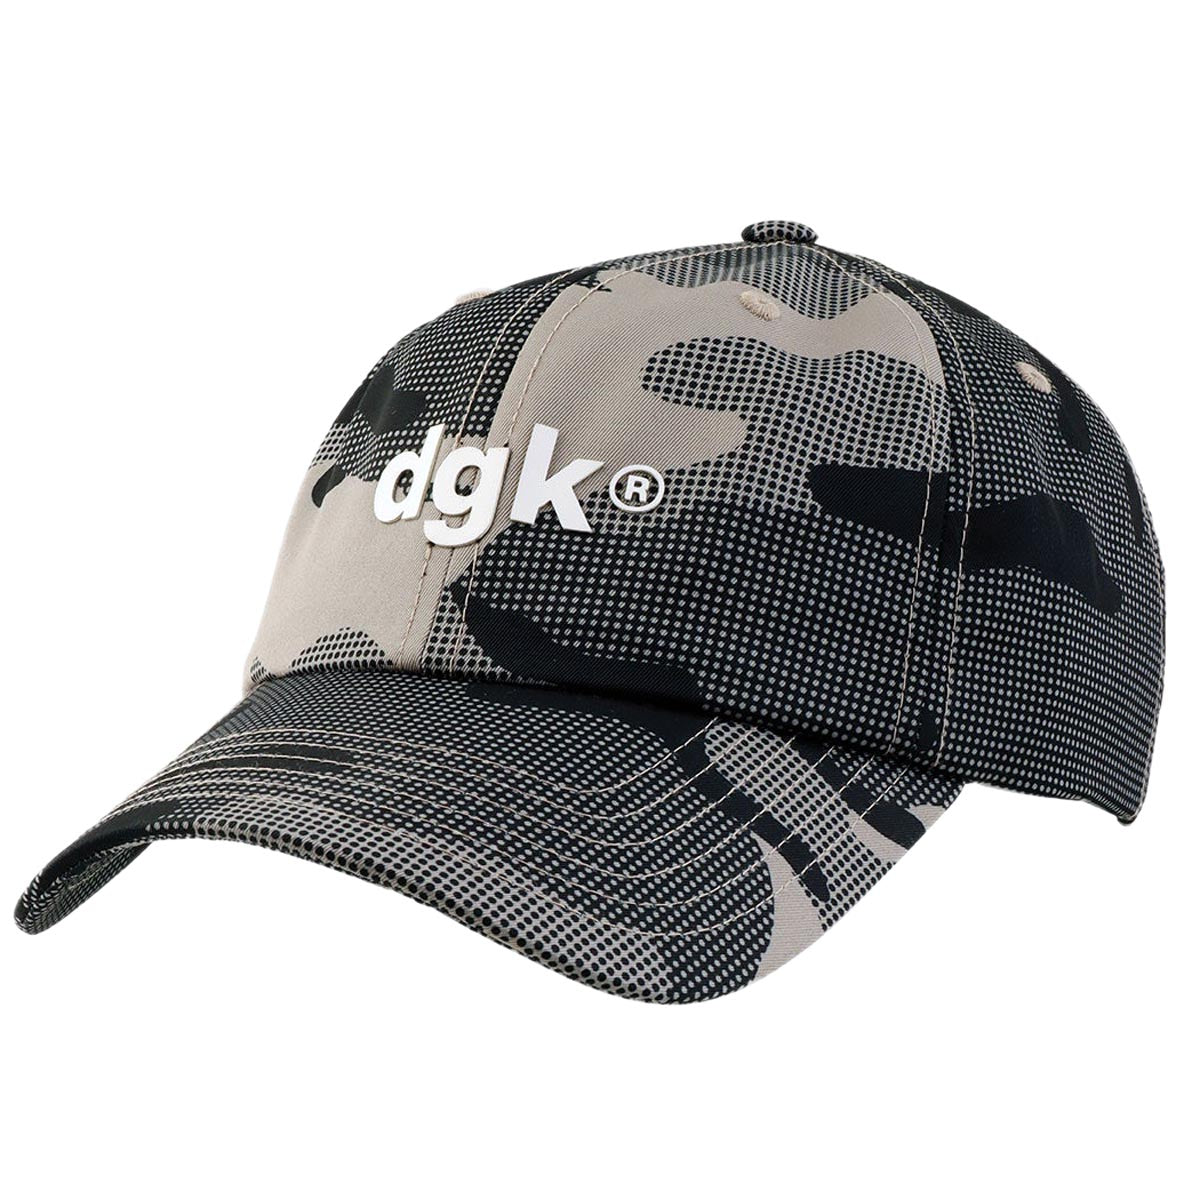 DGK Contra Strapback Hat - Black Camo image 1